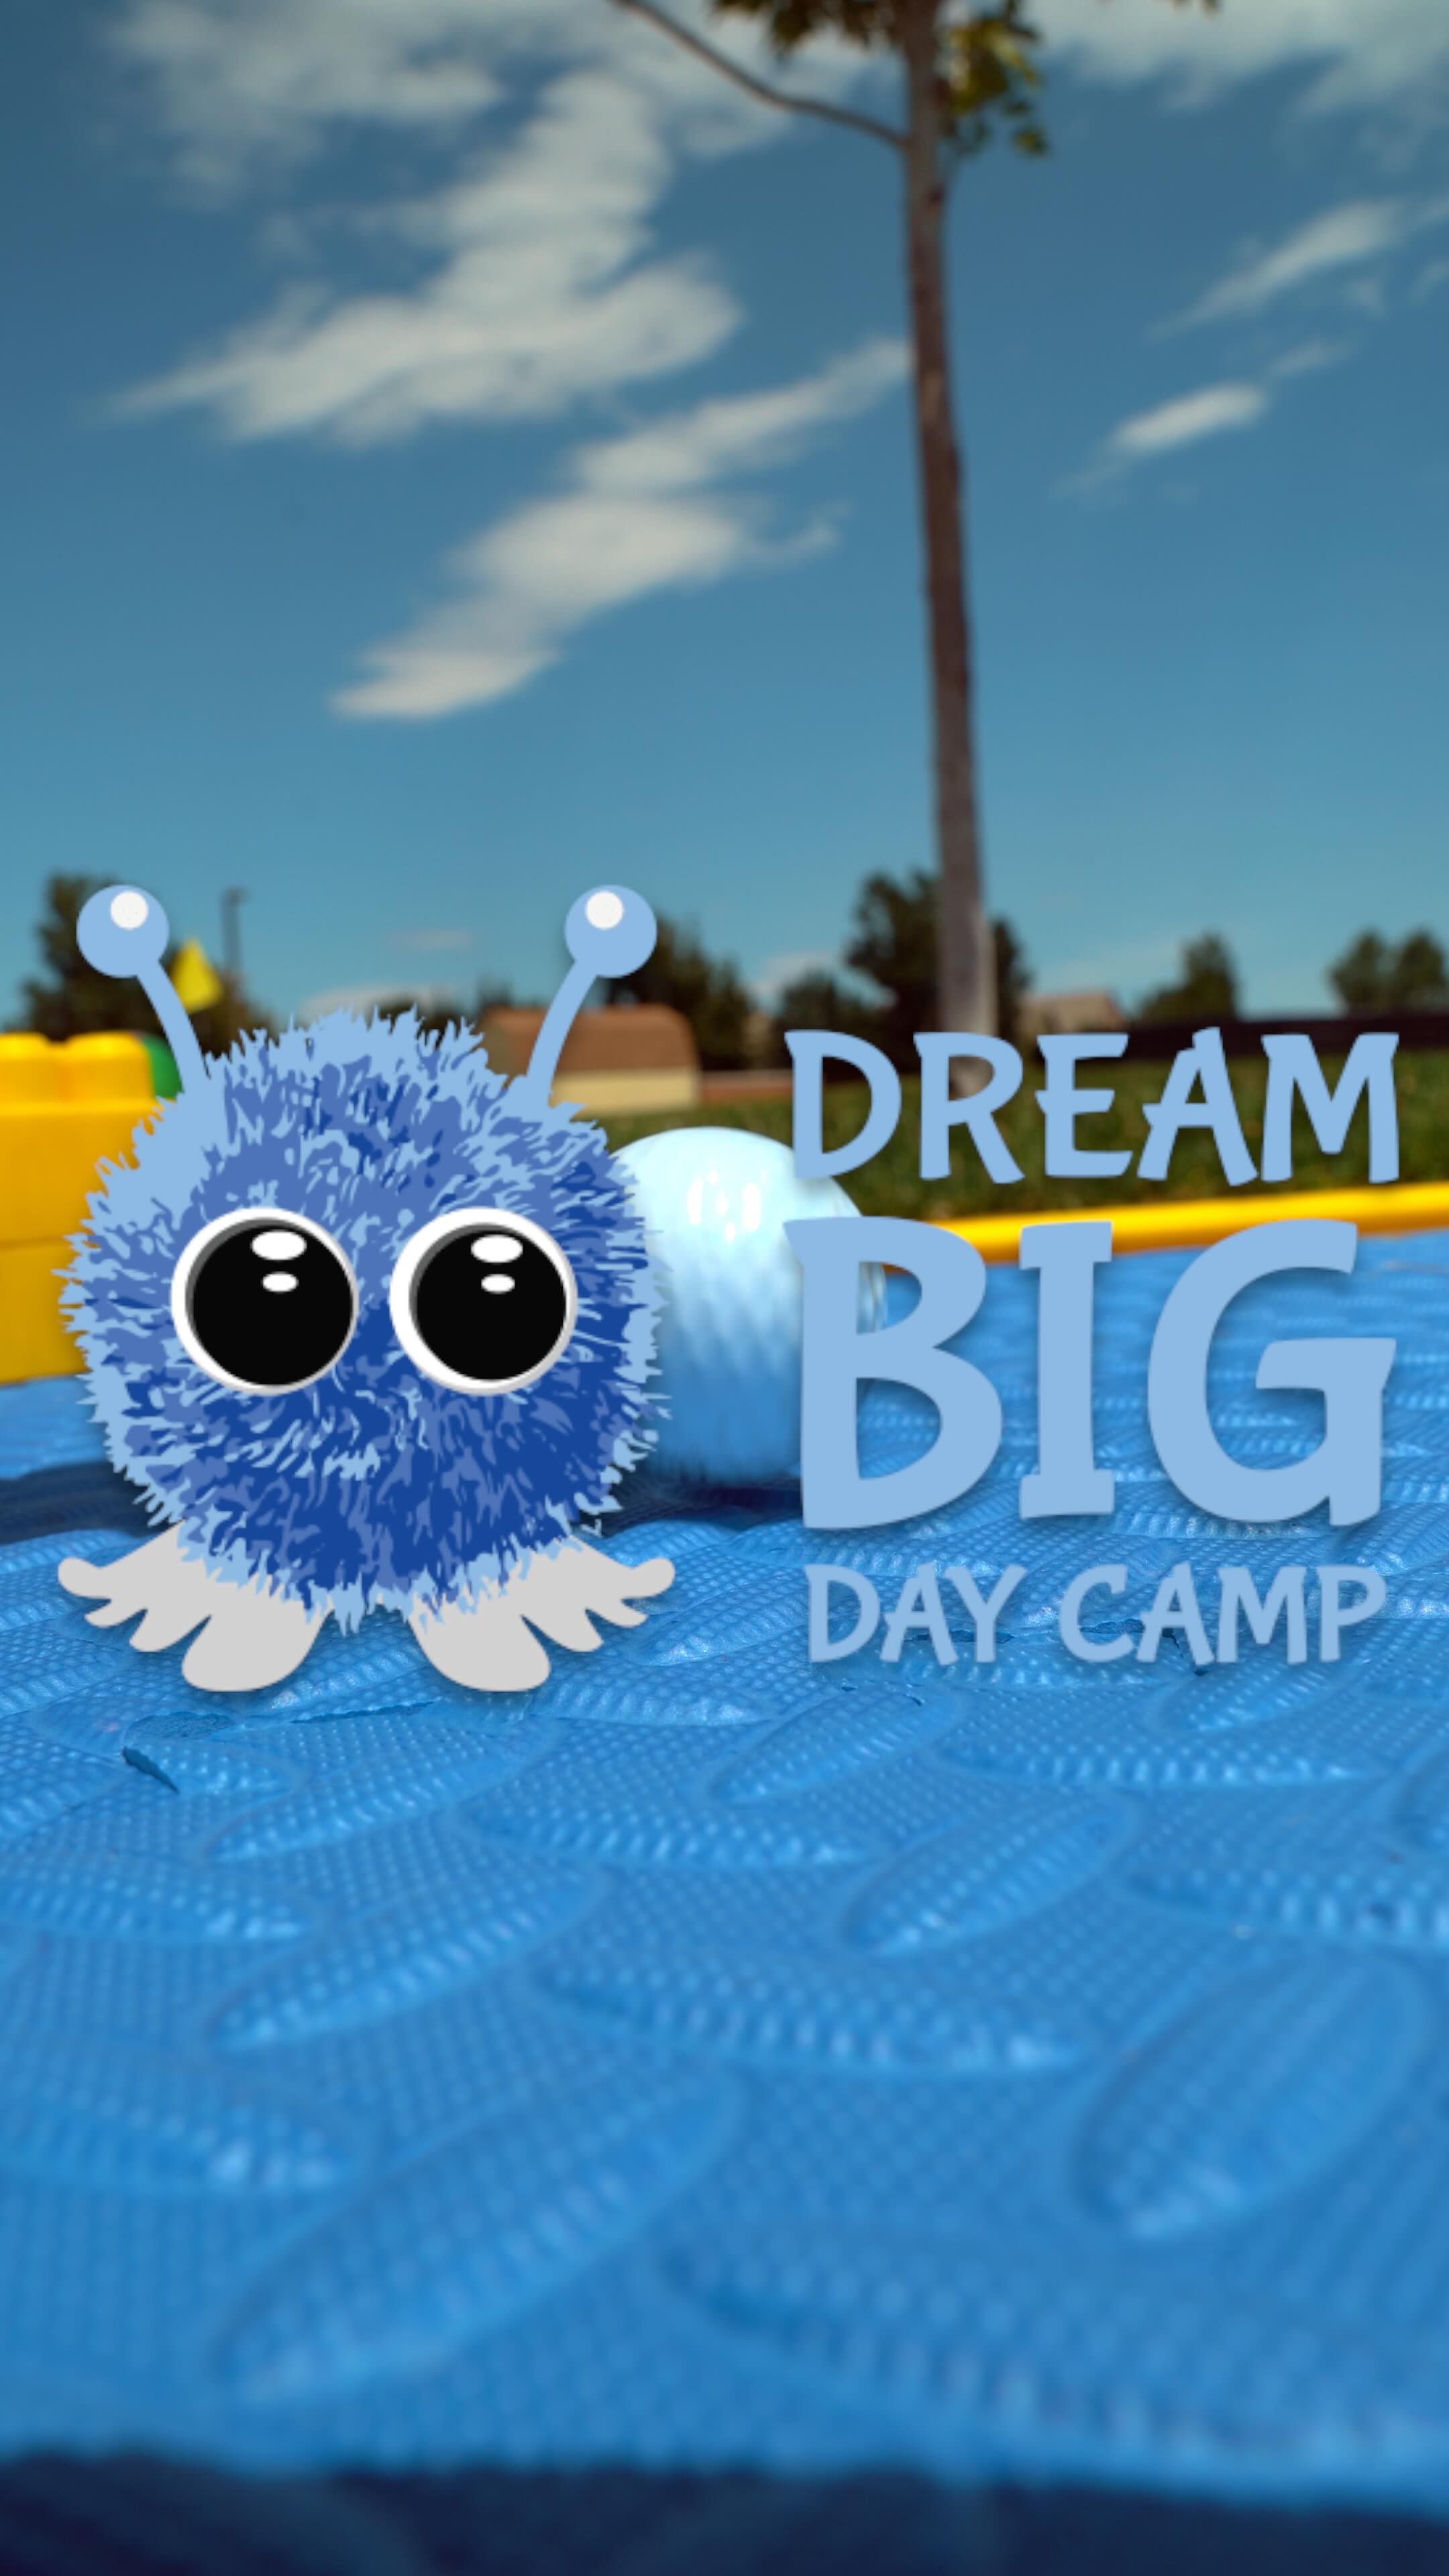 Mini golf at dream big day camp!

#summer2022 #dreambig #minigolfing